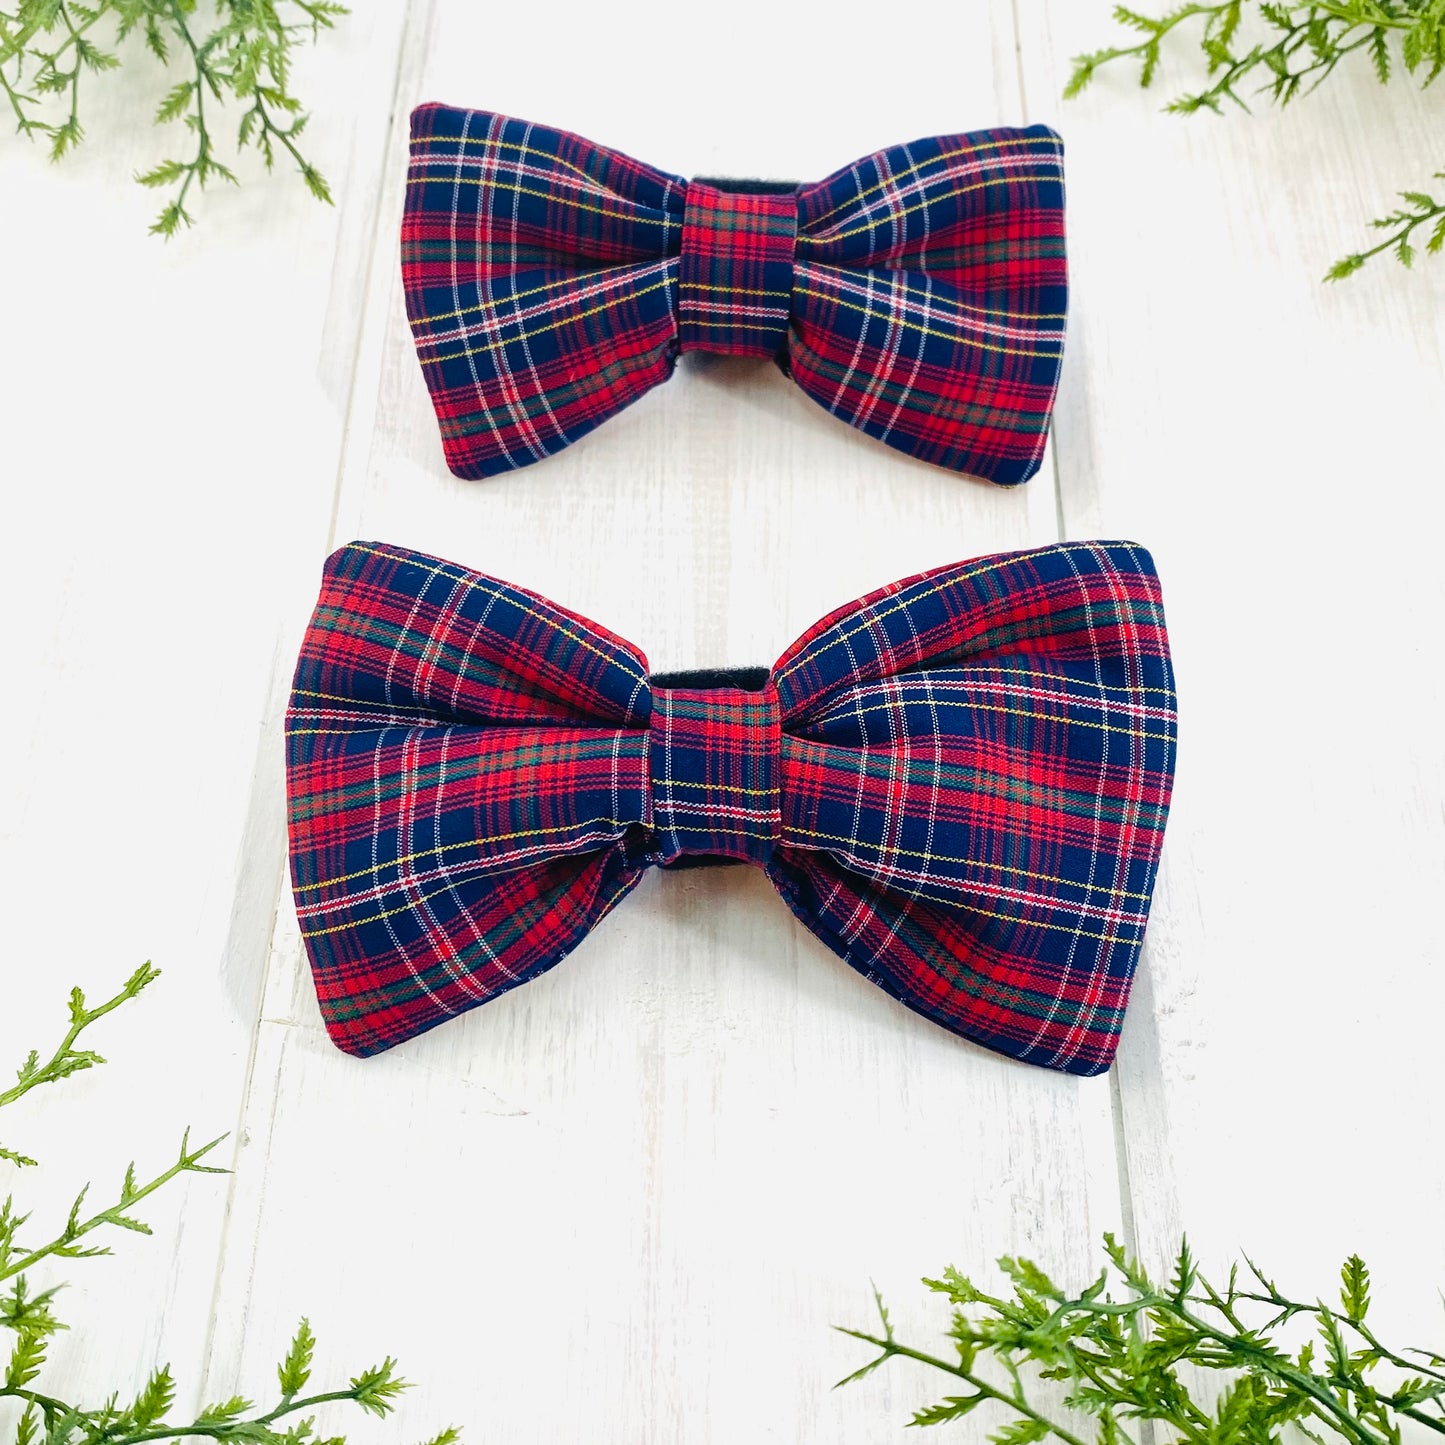 Tartan plaid bow tie in small and medium.